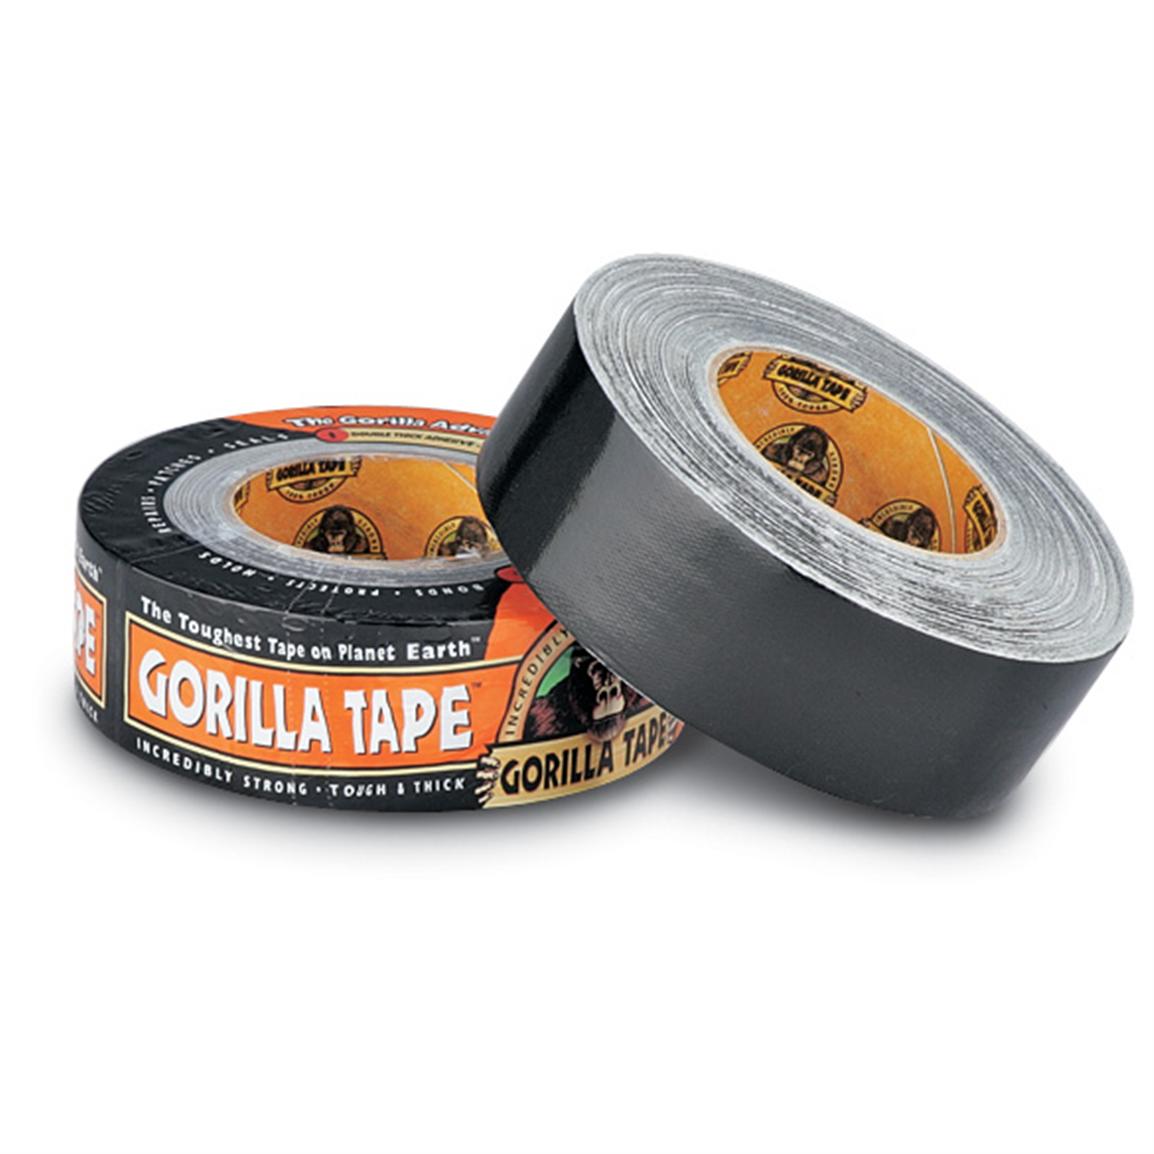 2 - Pk. Gorilla Tape - 100925, Garage & Tool Accessories at Sportsman's